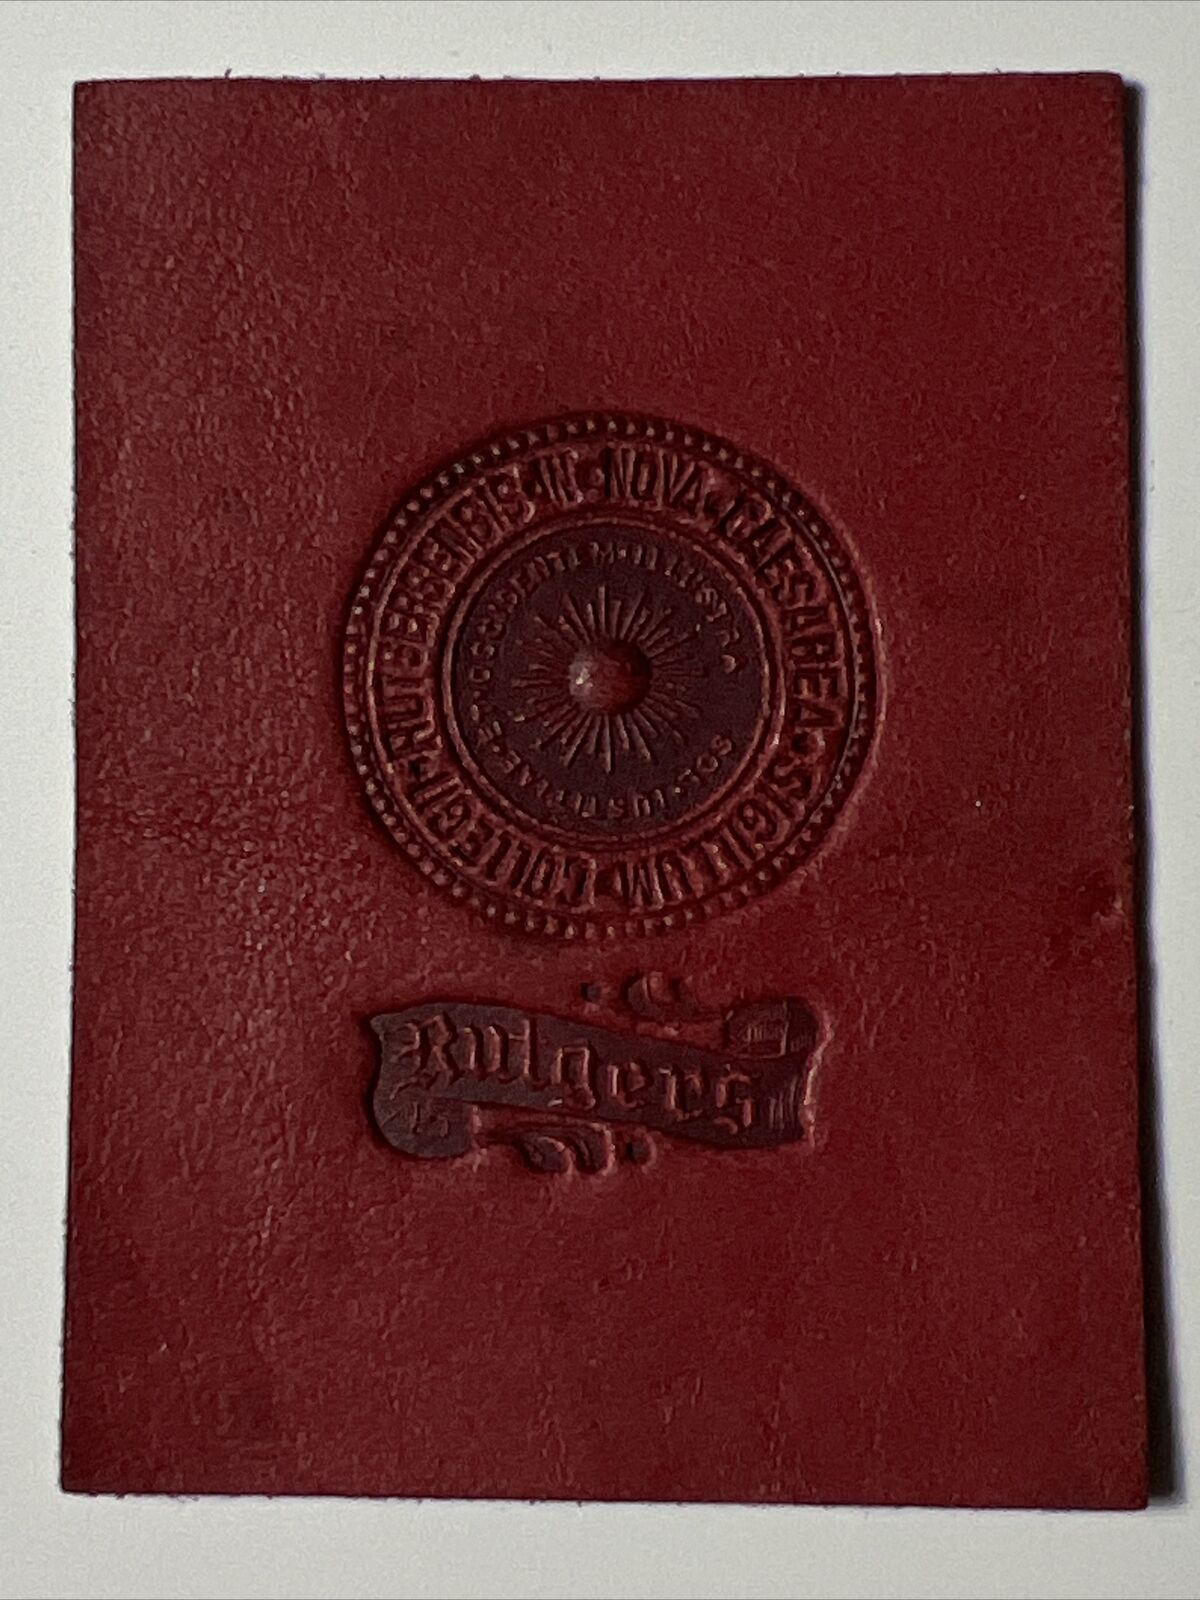 Vintage 1910 RUTGERS UNIVERSITY Tobacco Leather Patch NEW BRUNSWICK New Jersey